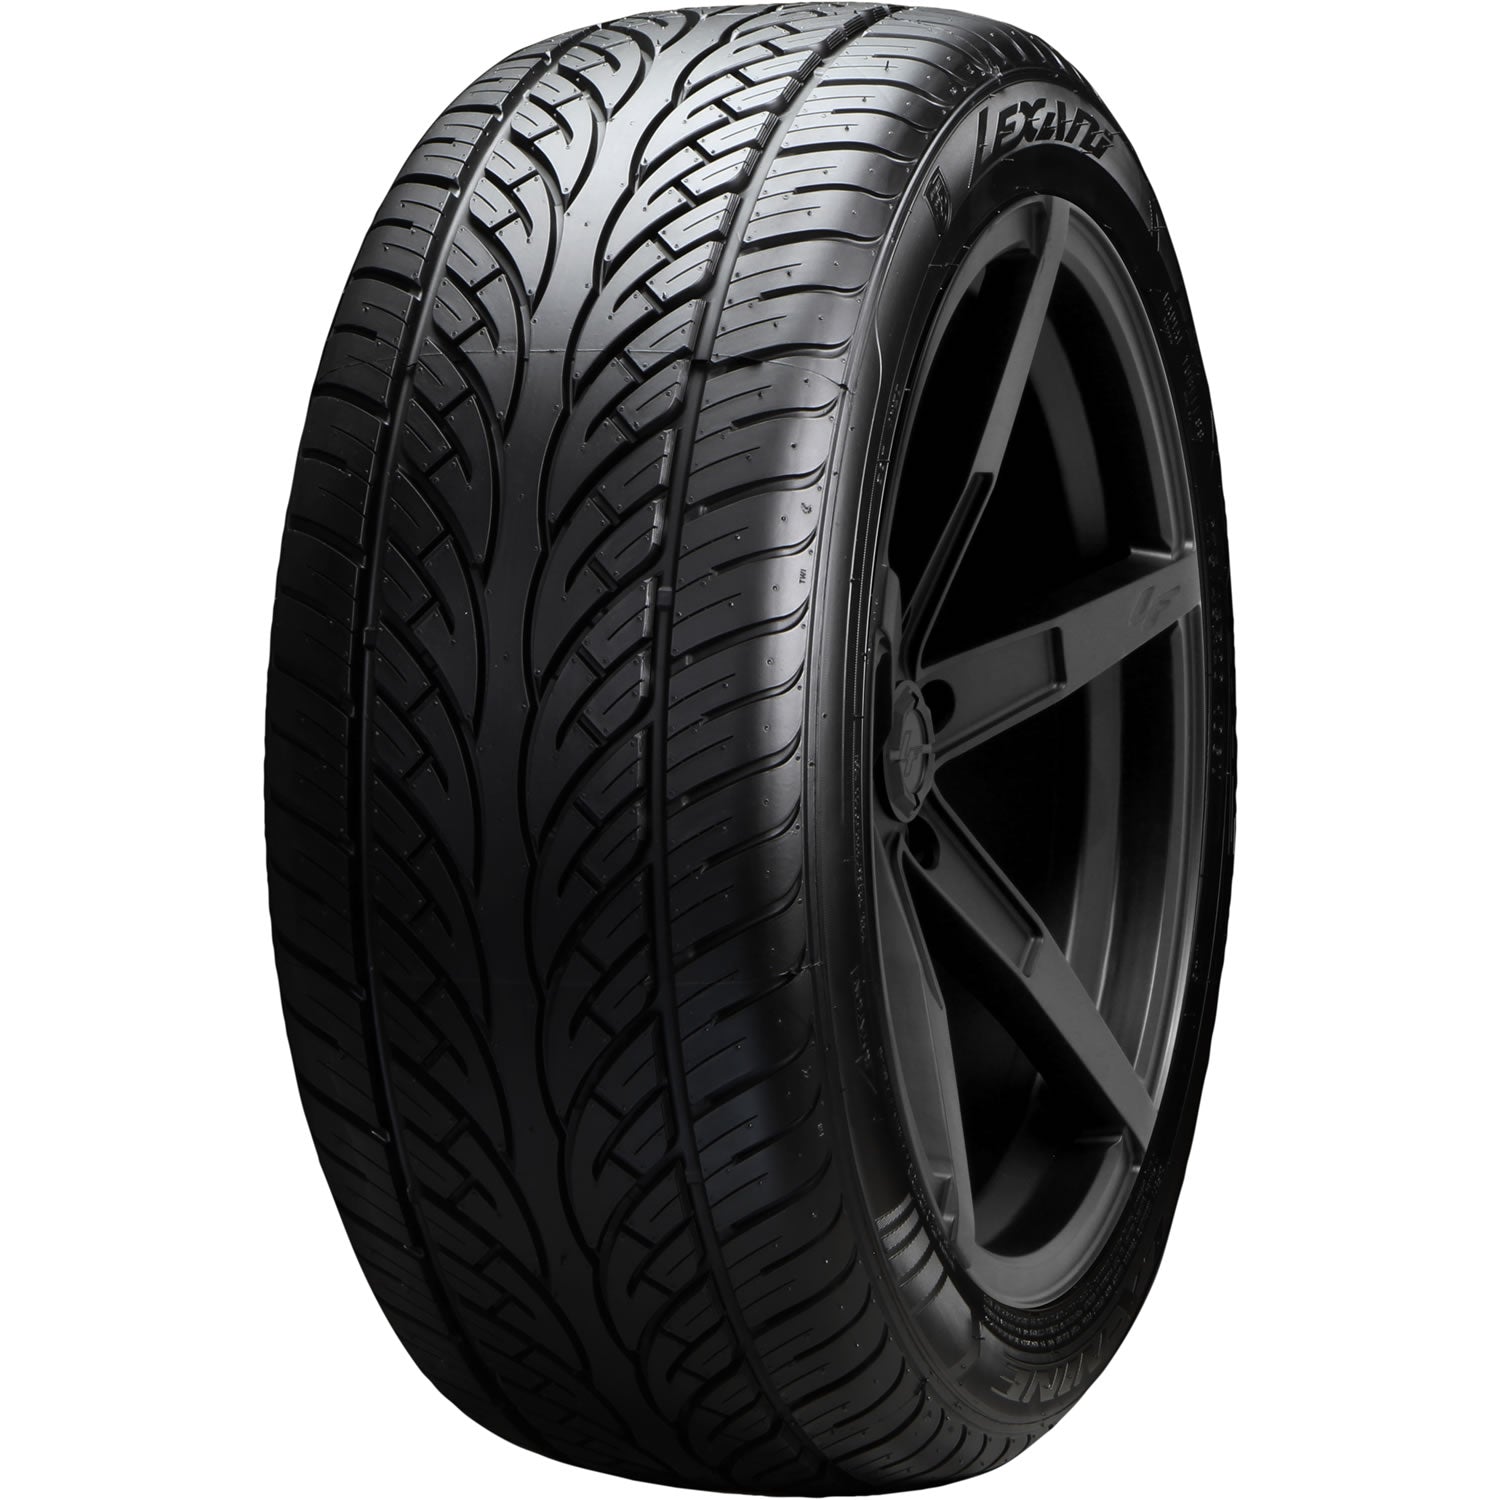 LEXANI LX-NINE 295/35R24 (32.1X11.9R 24) Tires